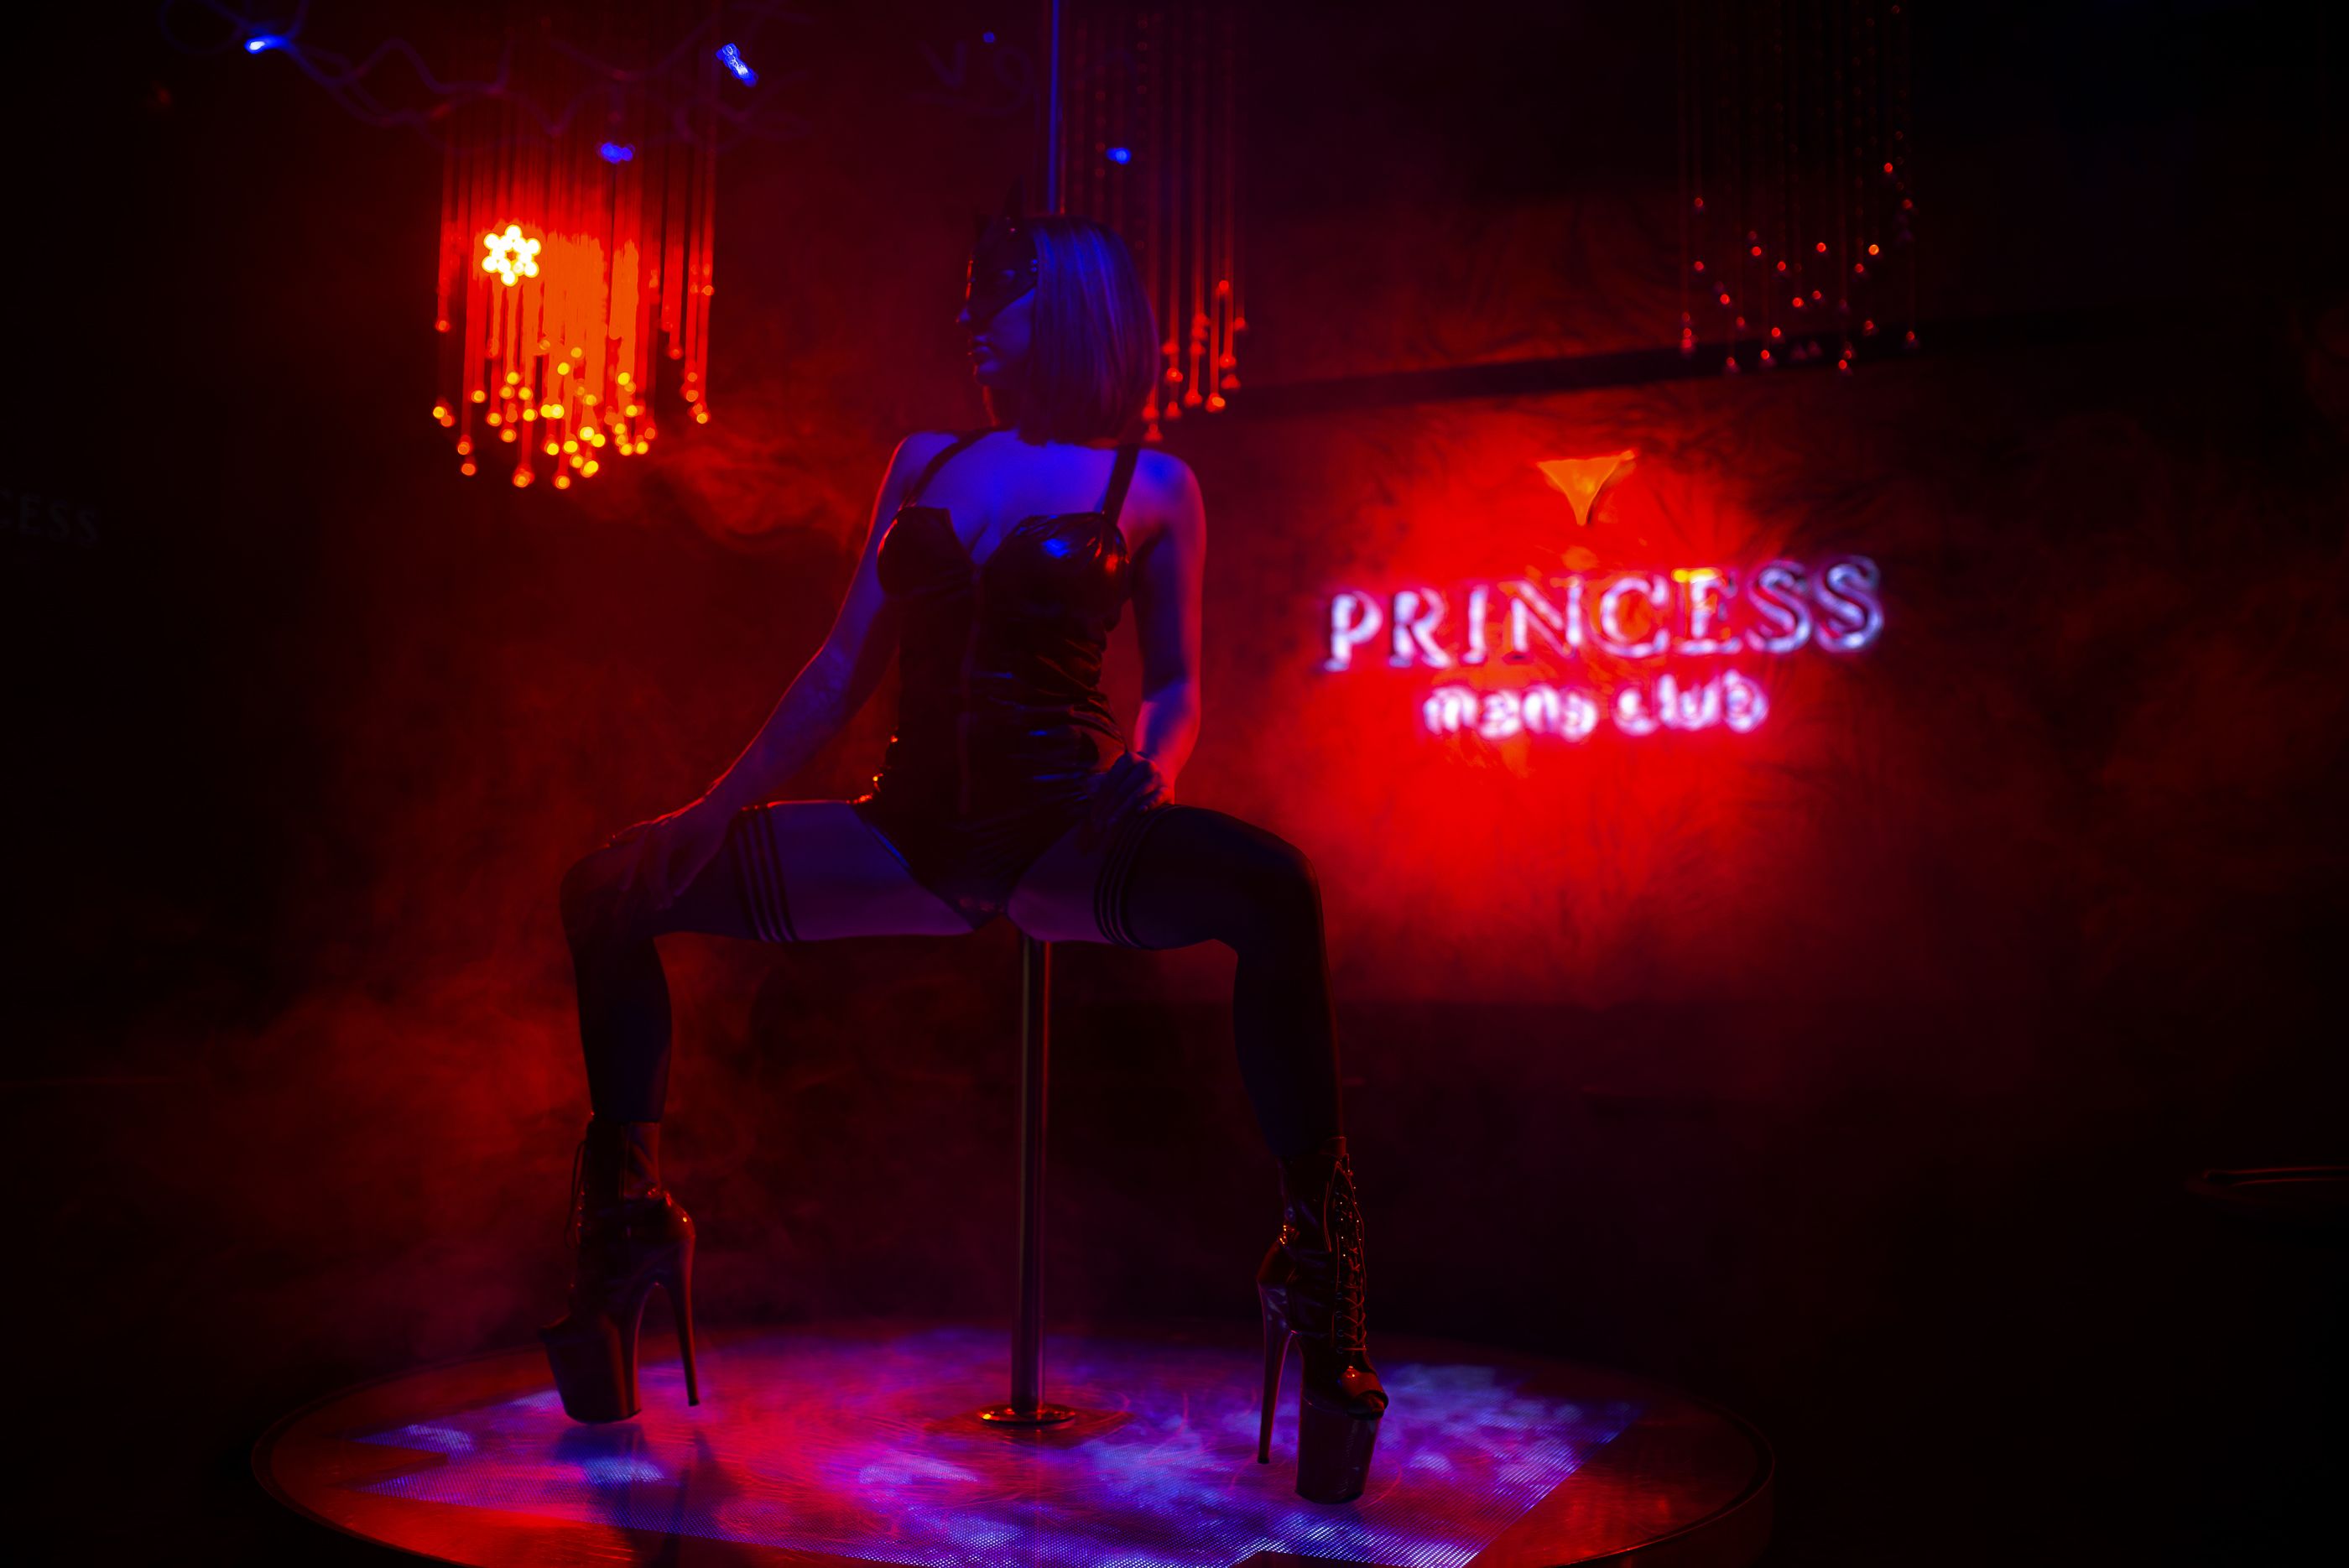 Princess Men's Club -  Gentlemens Club Brothel Strip Club